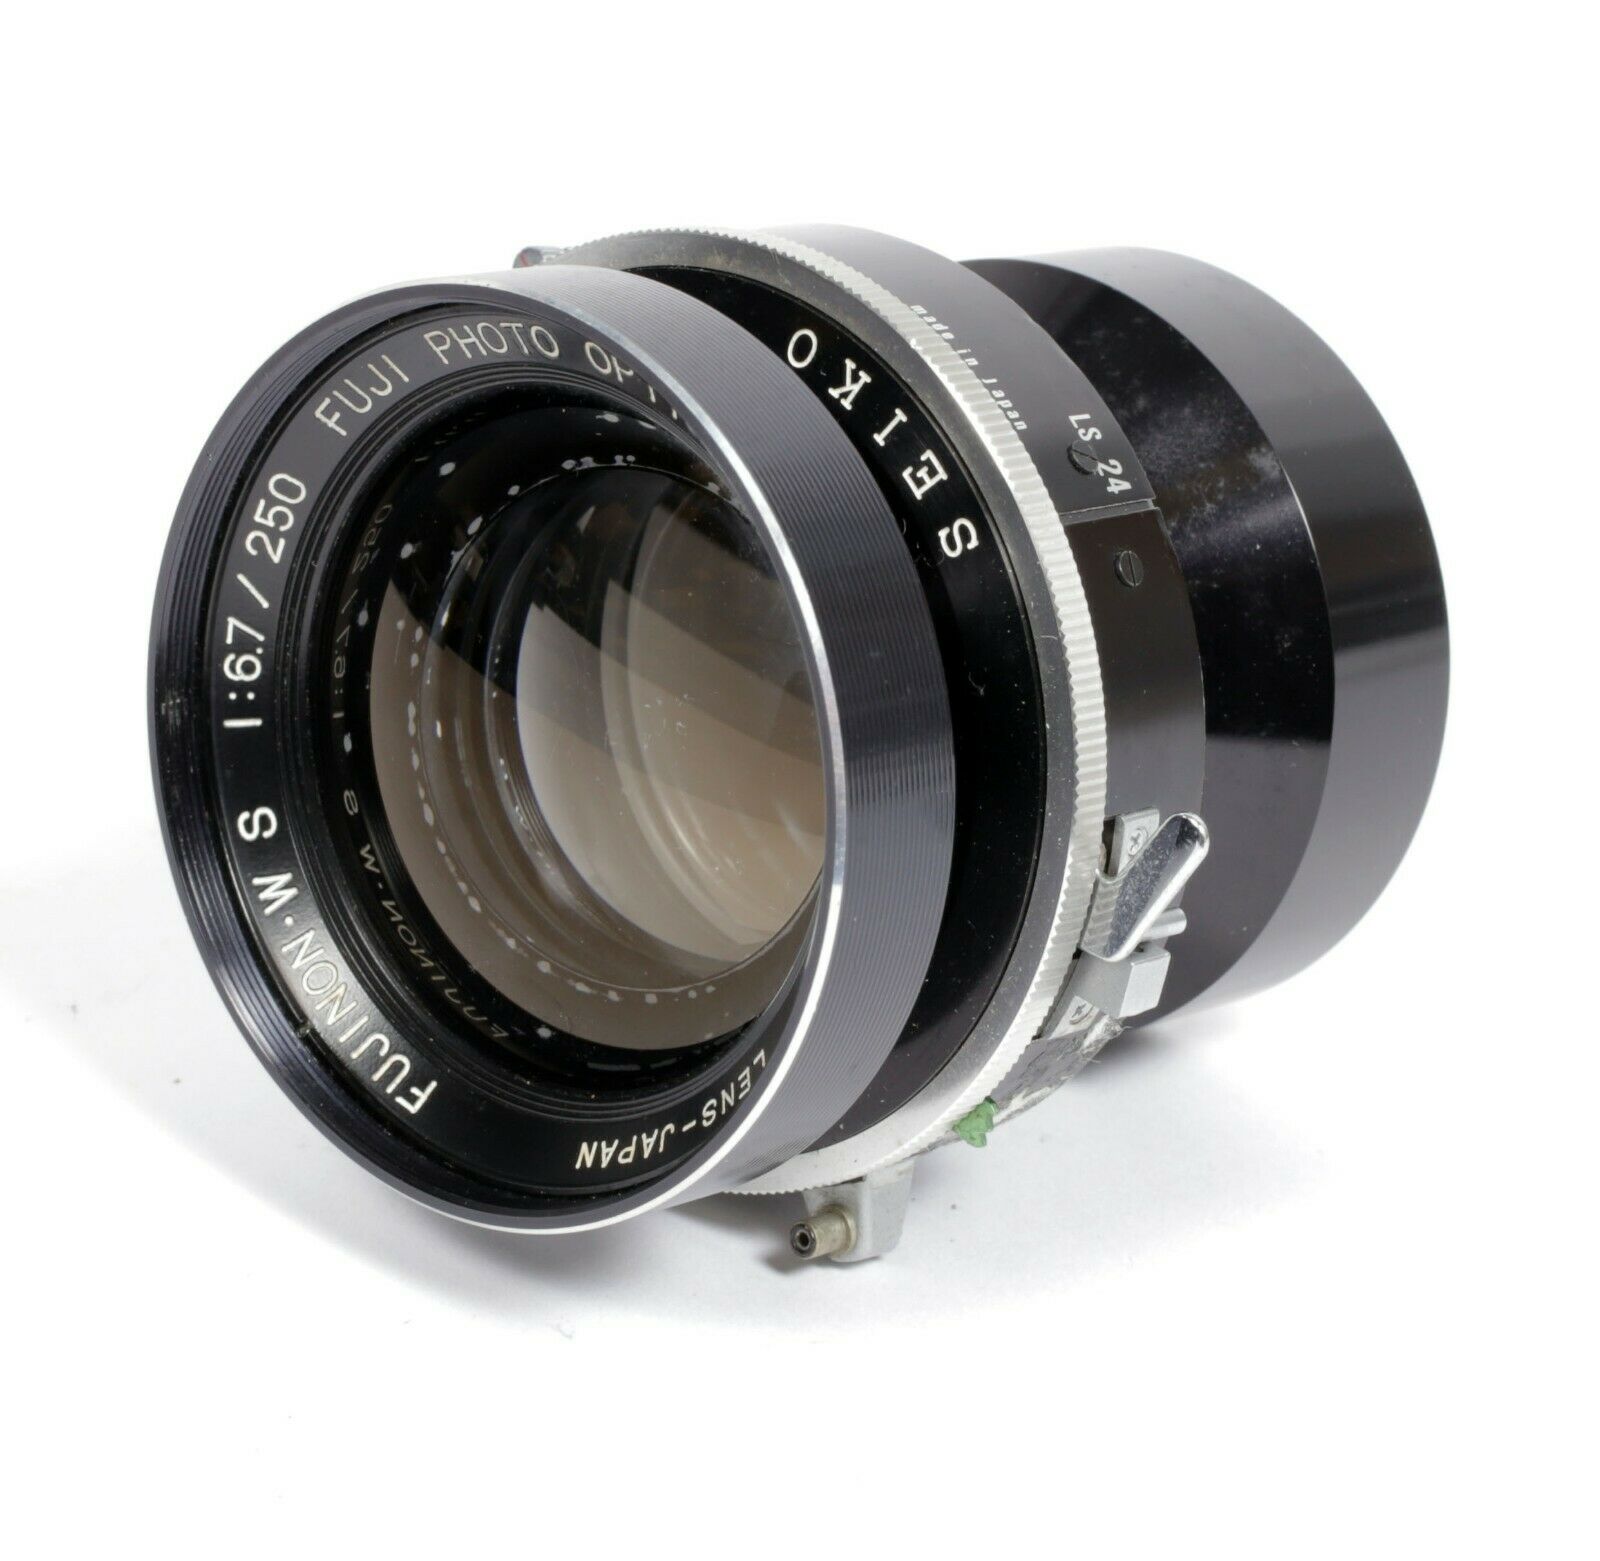 Fuji Fujinon WS 250mm F6.7 Lens in Seiko #1 (Covers 8X10) 